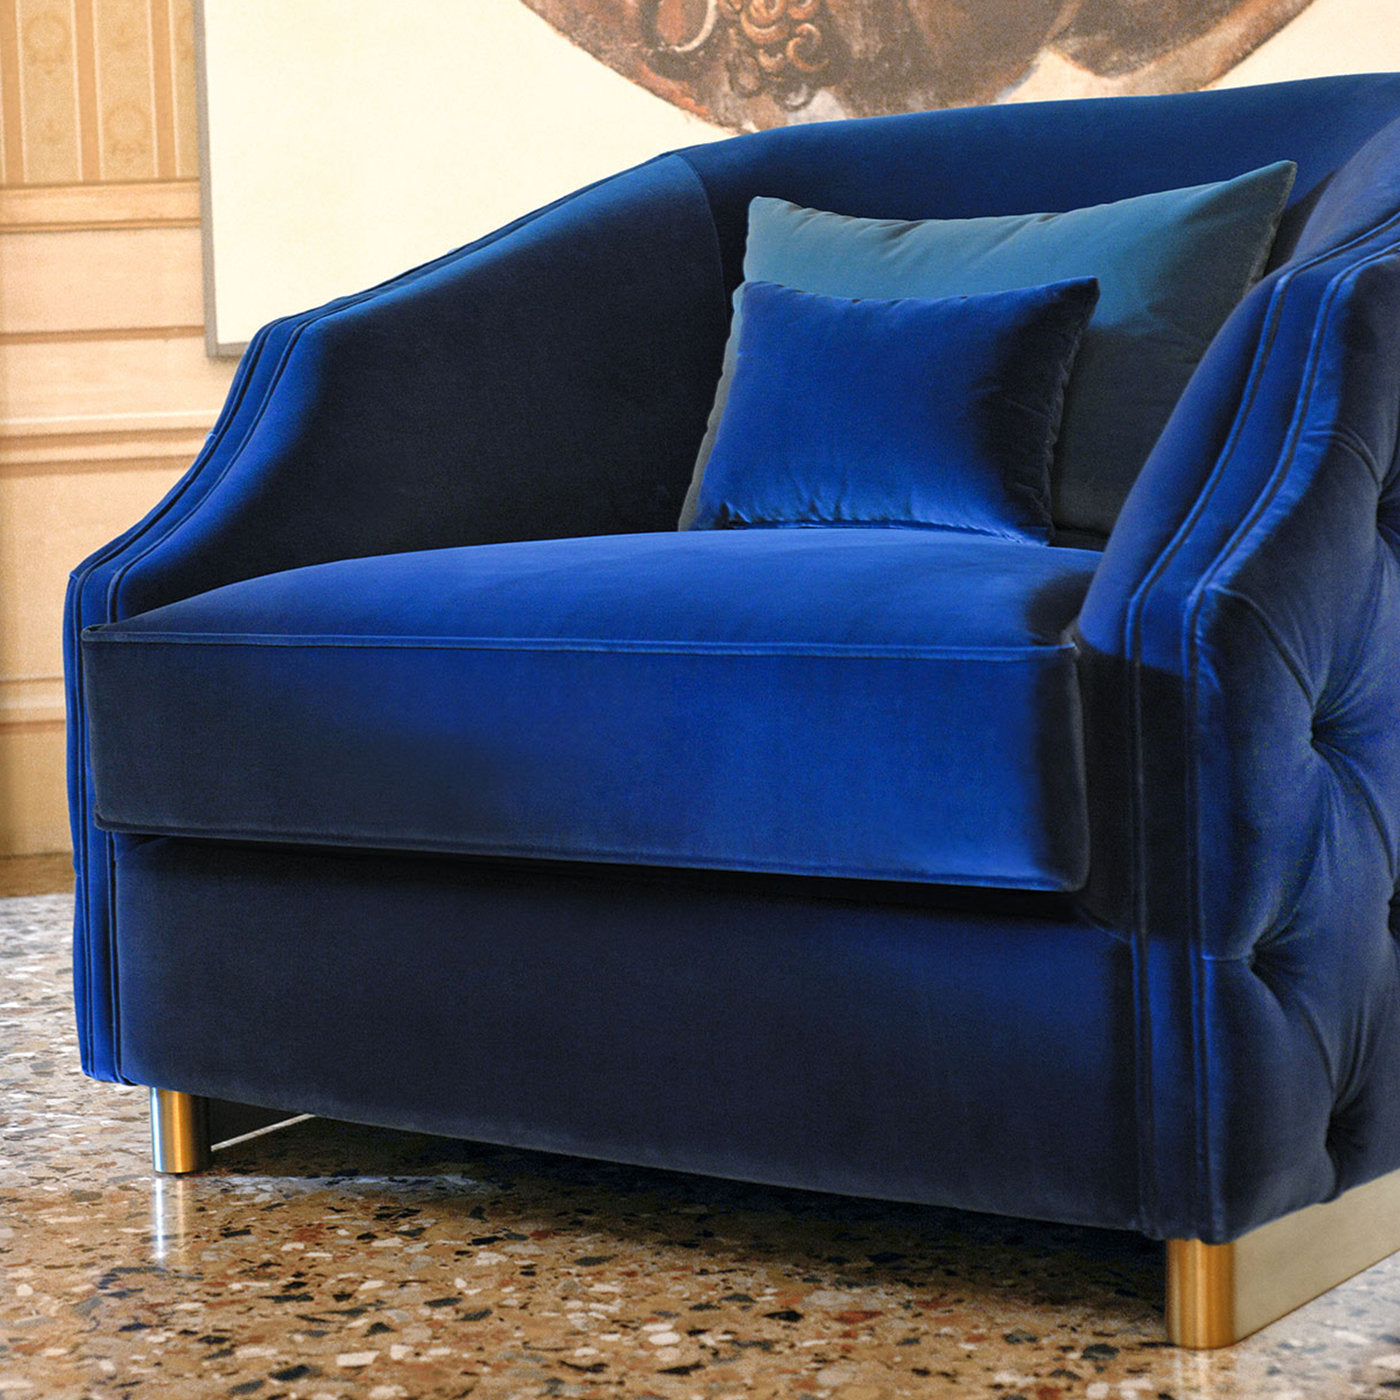 Cleio Large Blue Armchair - Alternative view 4